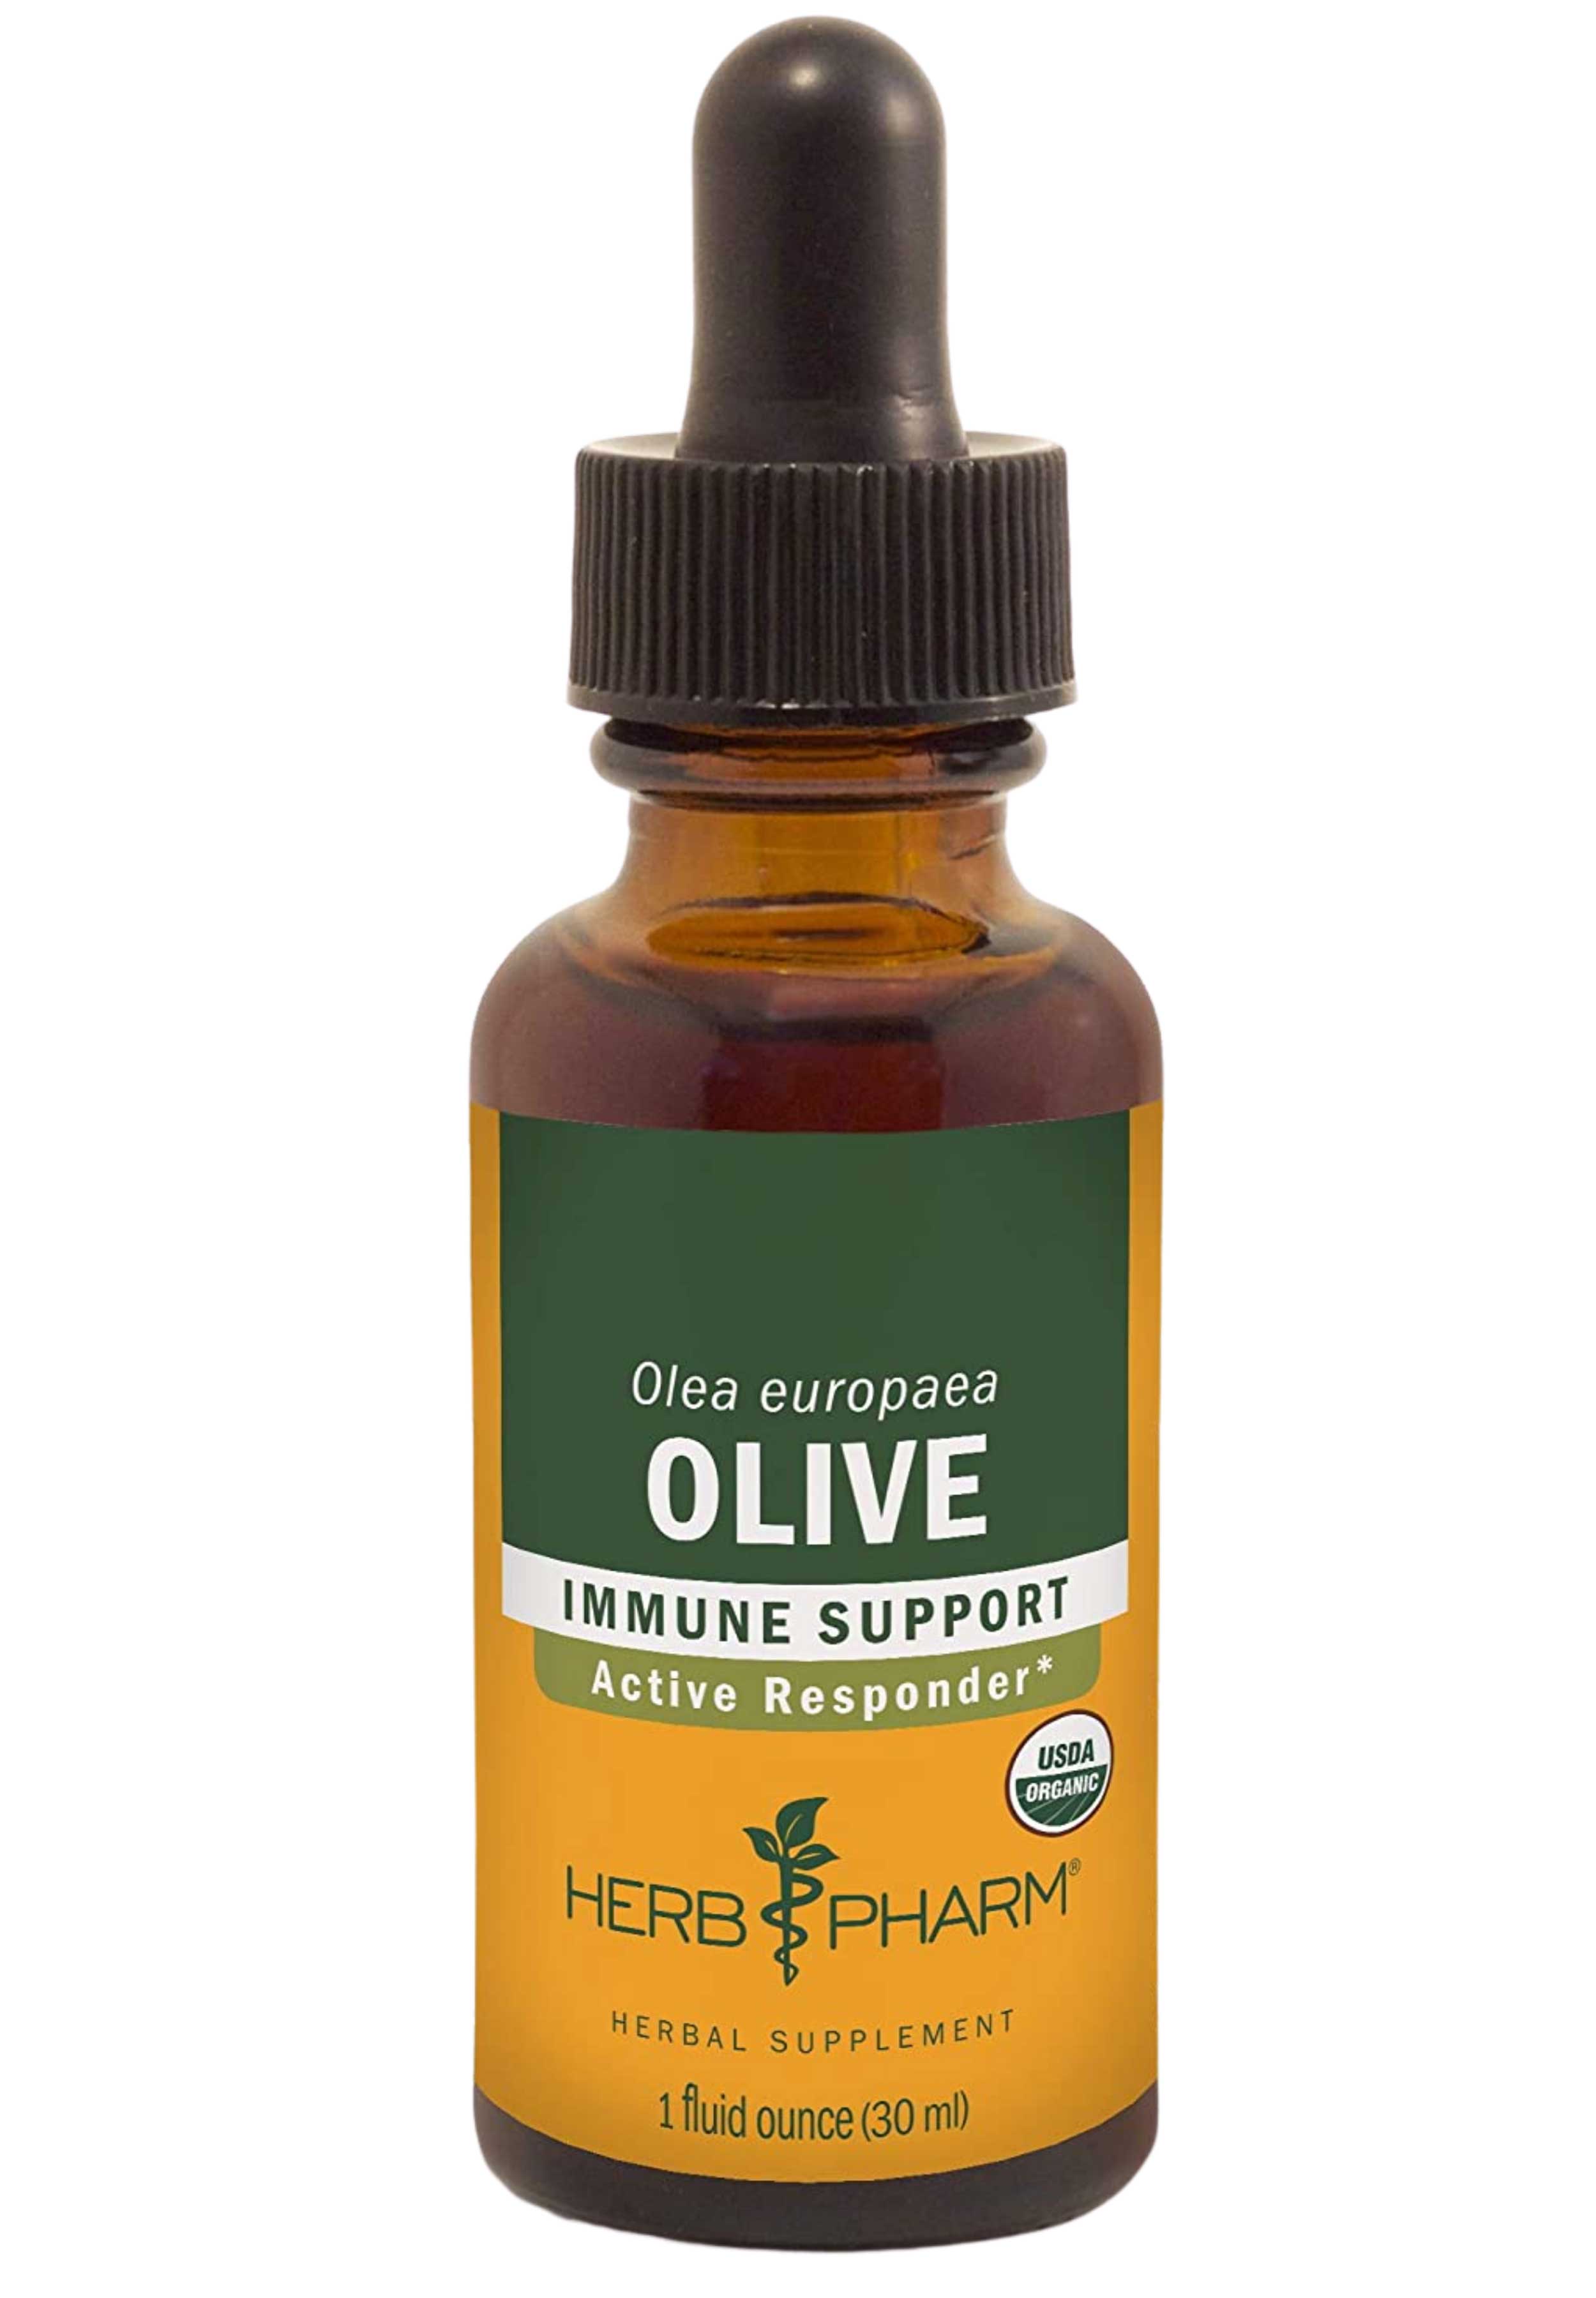 Herb Pharm Olive